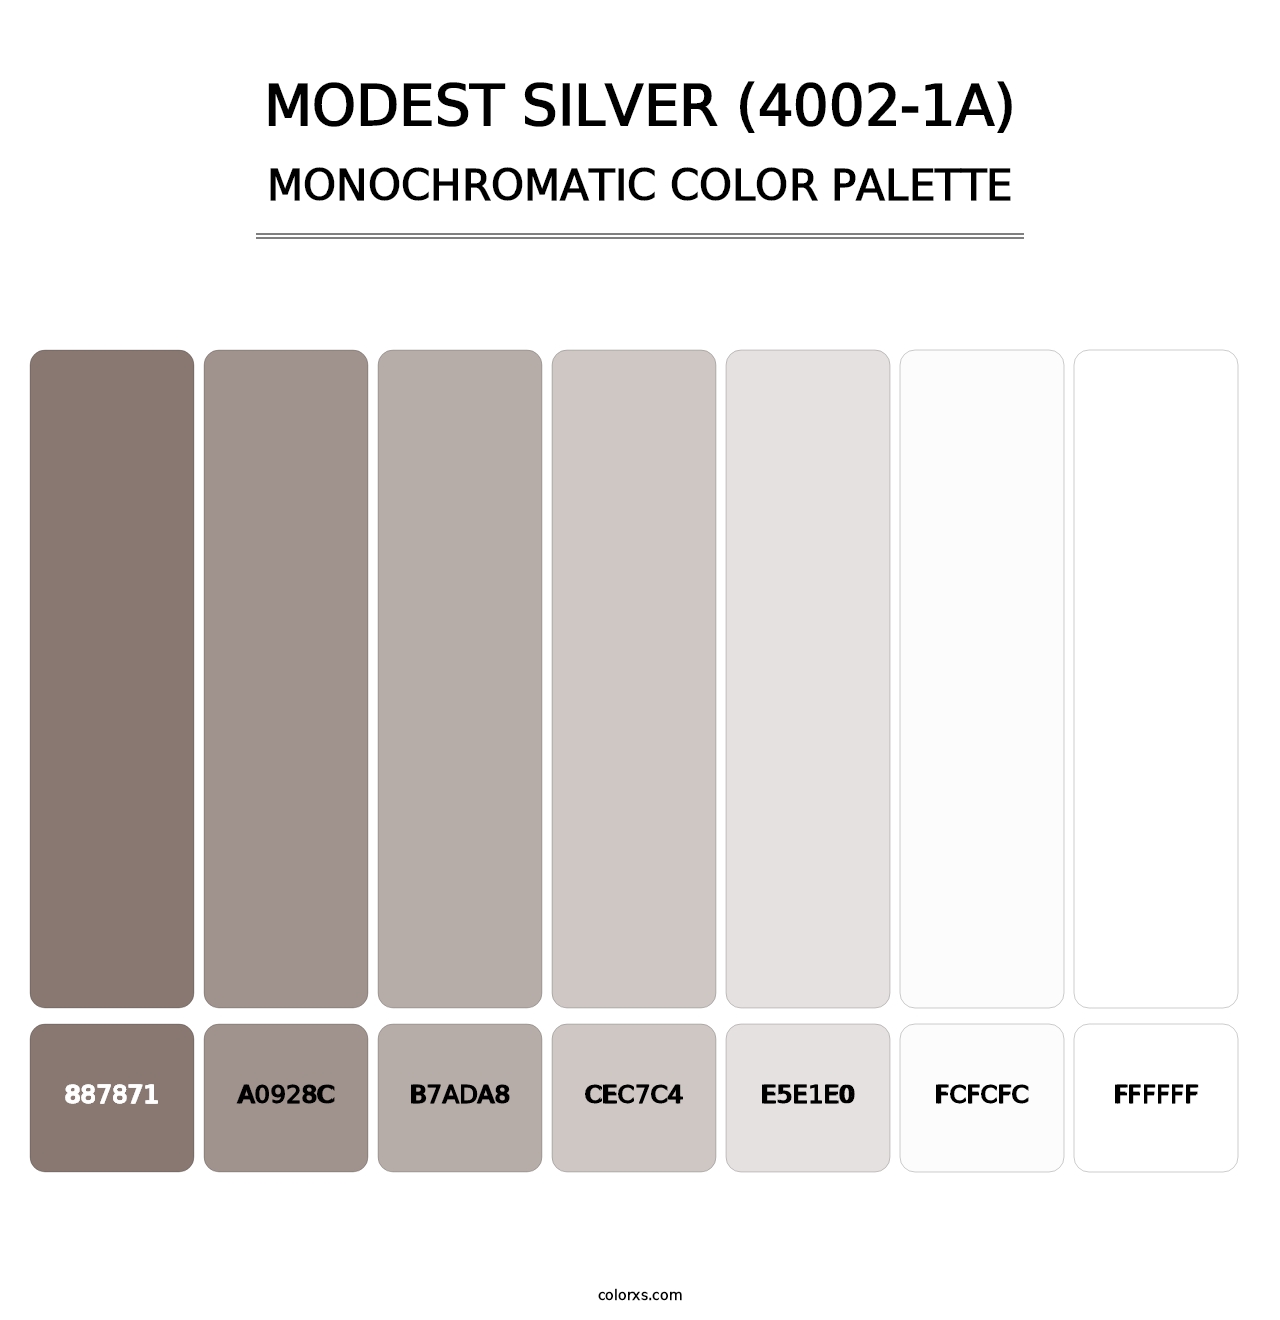 Modest Silver (4002-1A) - Monochromatic Color Palette